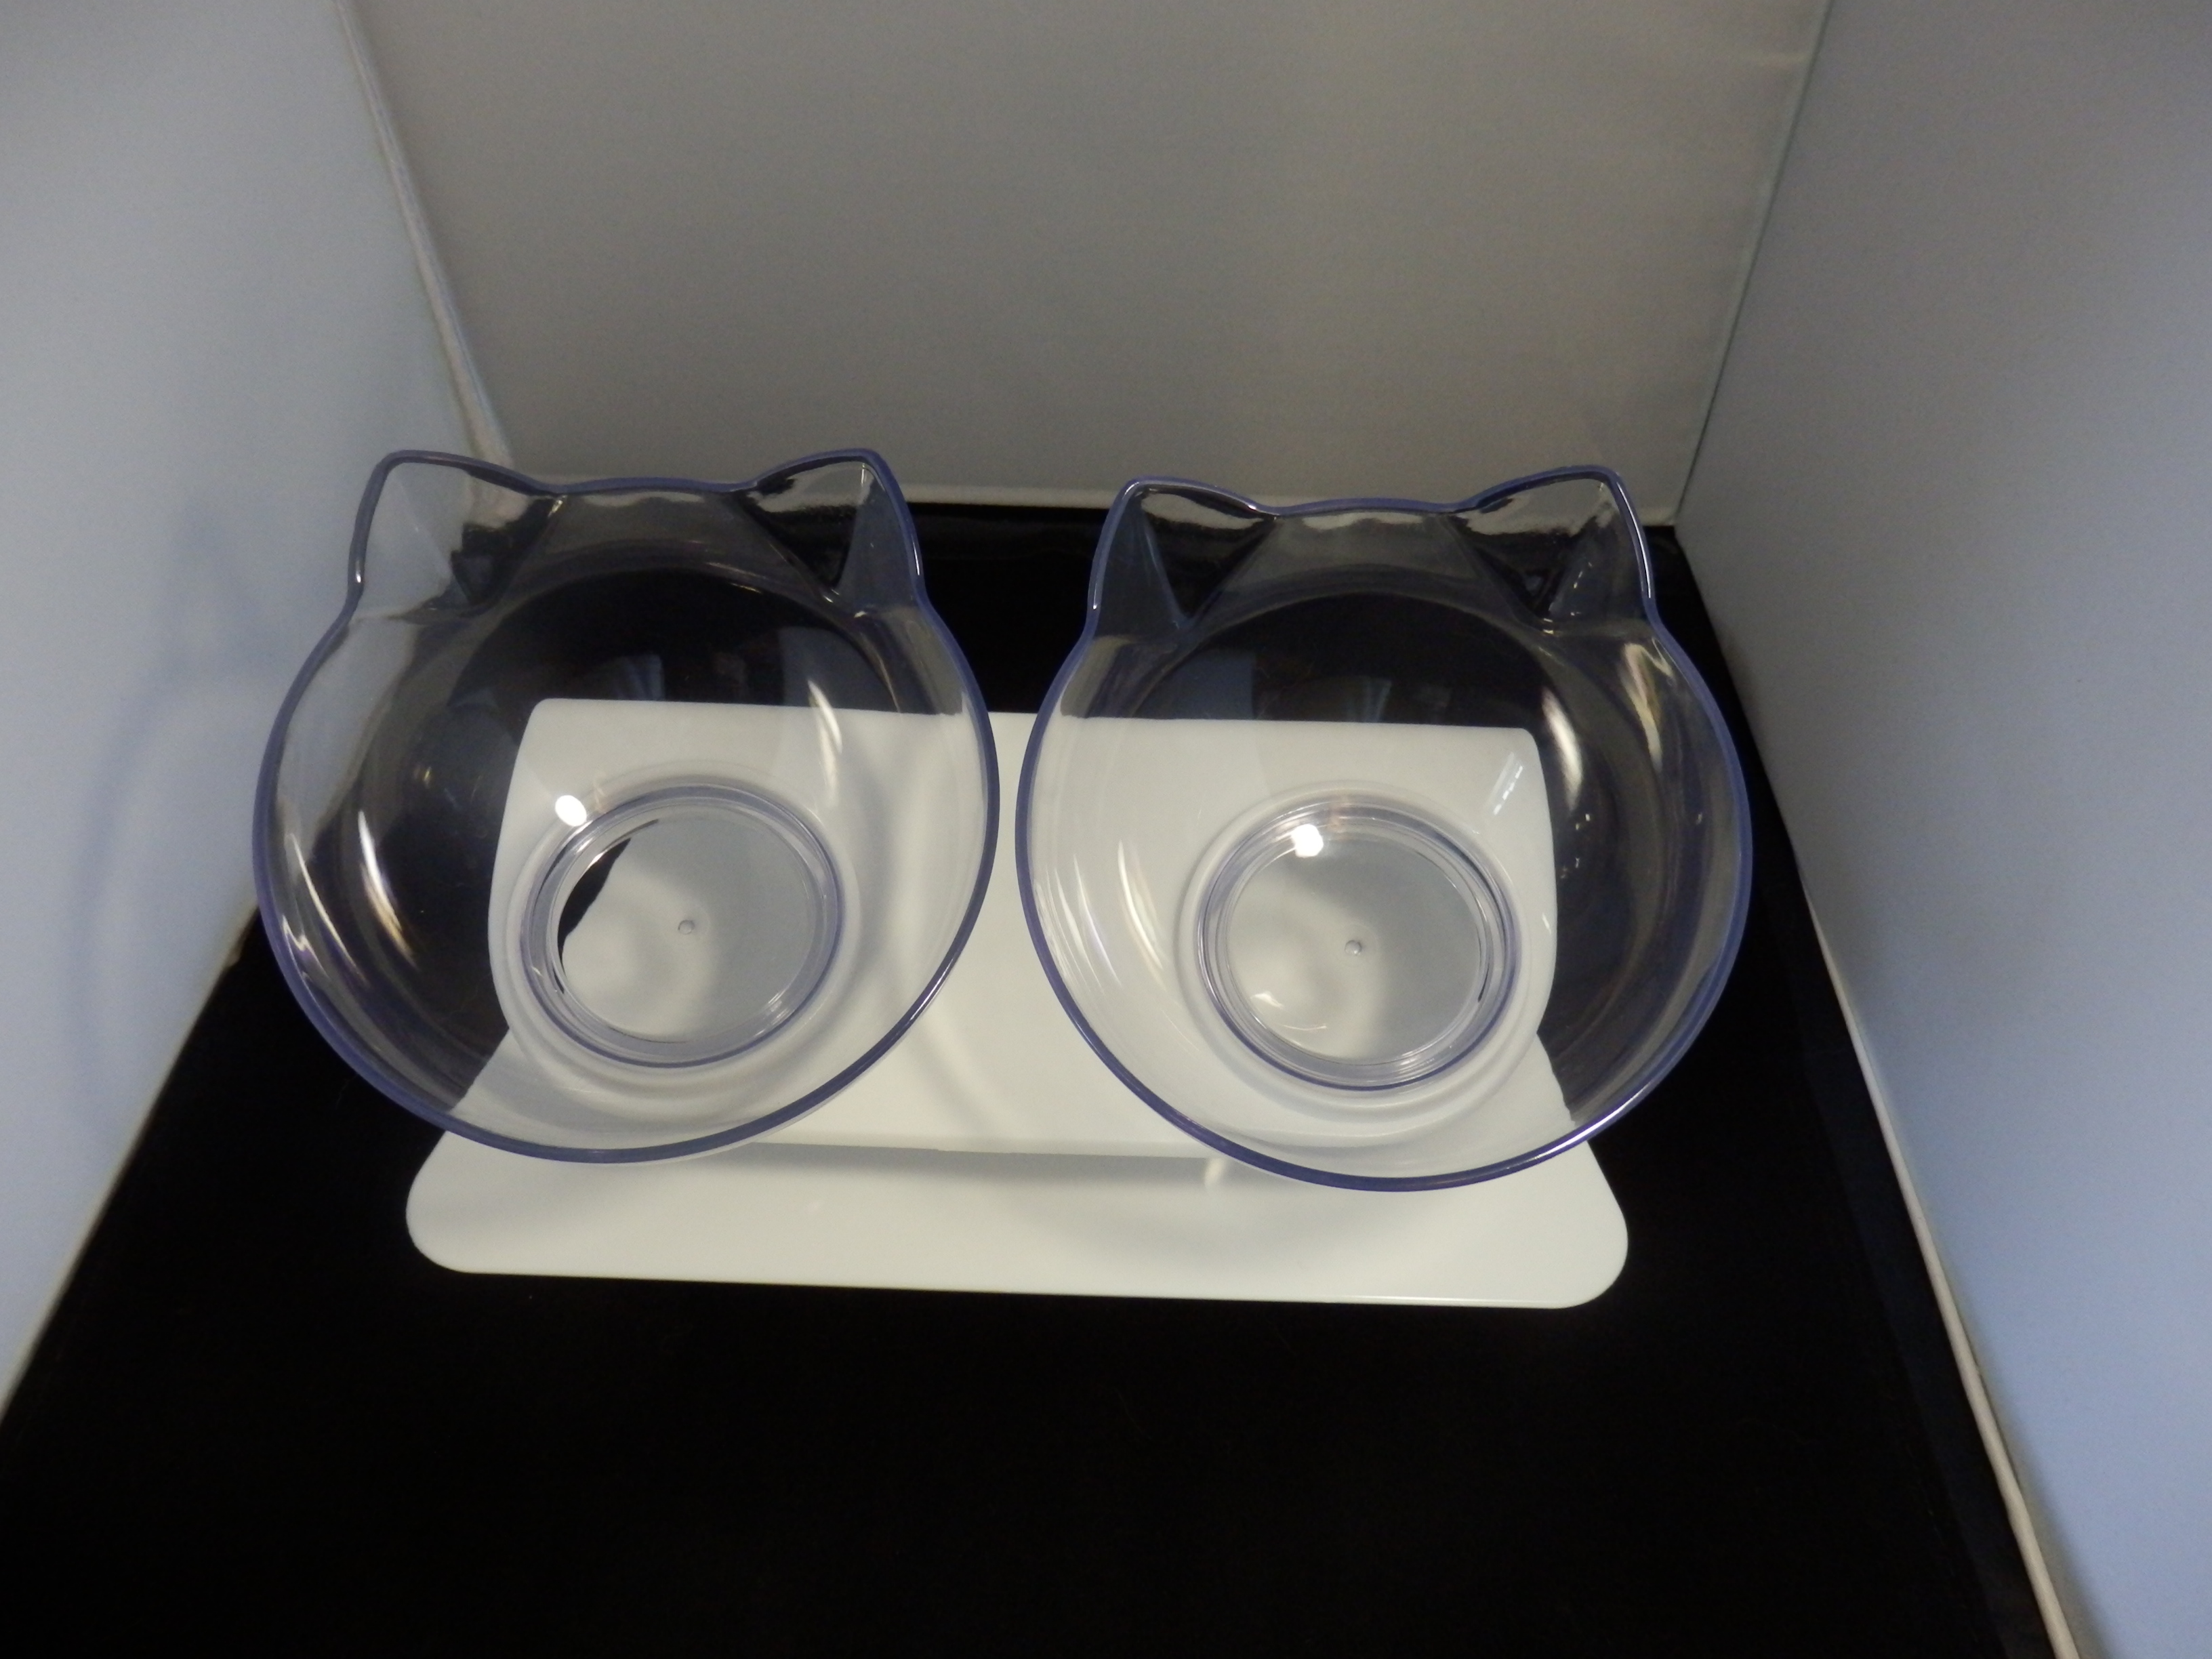 SKJIND 15°Tilted Cat Head-Shaped Transparent Double Bowls with Raised Platform